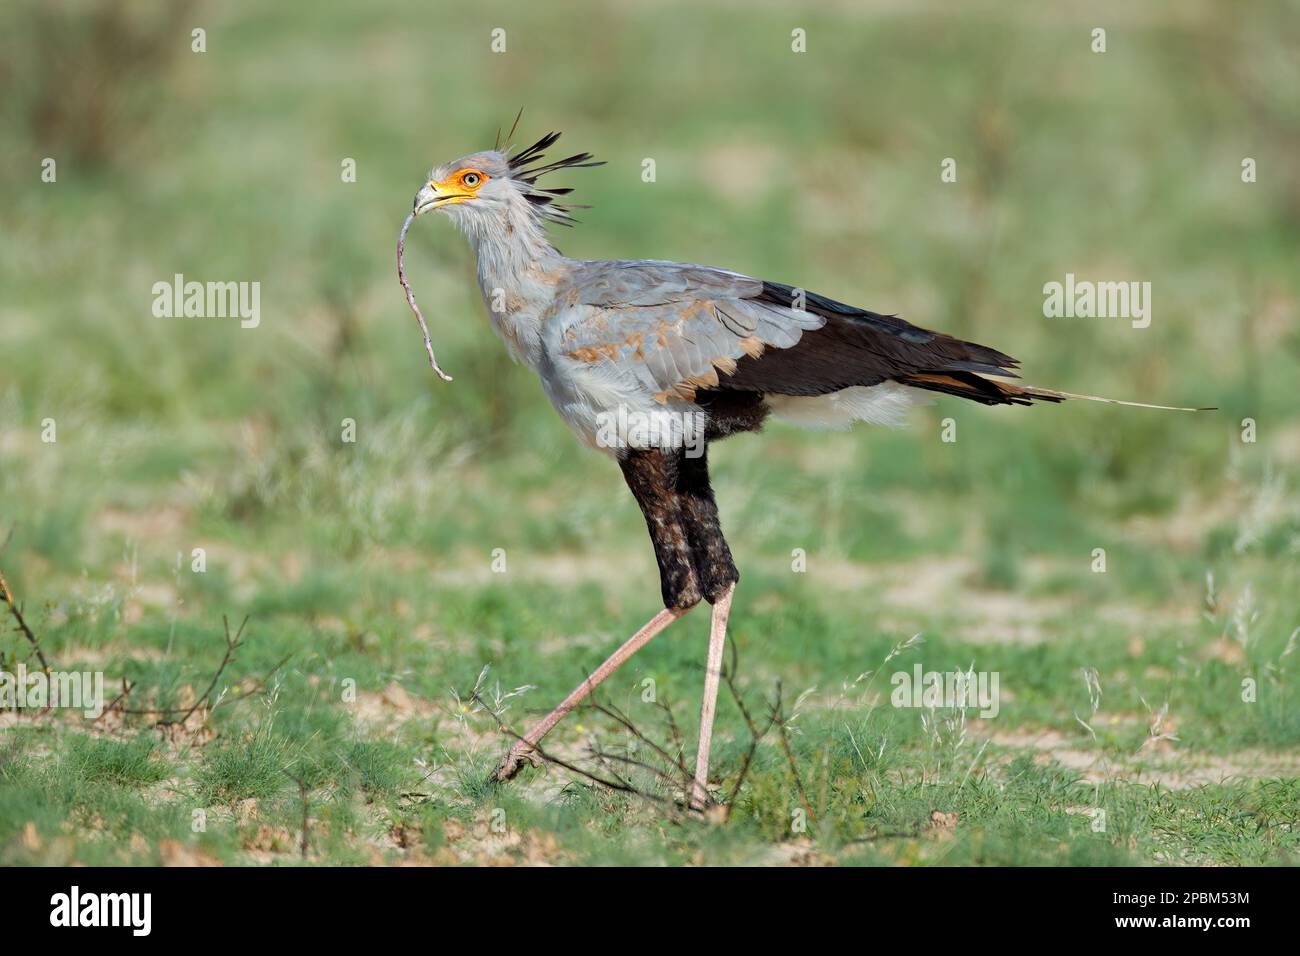 Un ave secretaria (Sagitario serpentario) cazando en hábitat natural, Sudáfrica Foto de stock